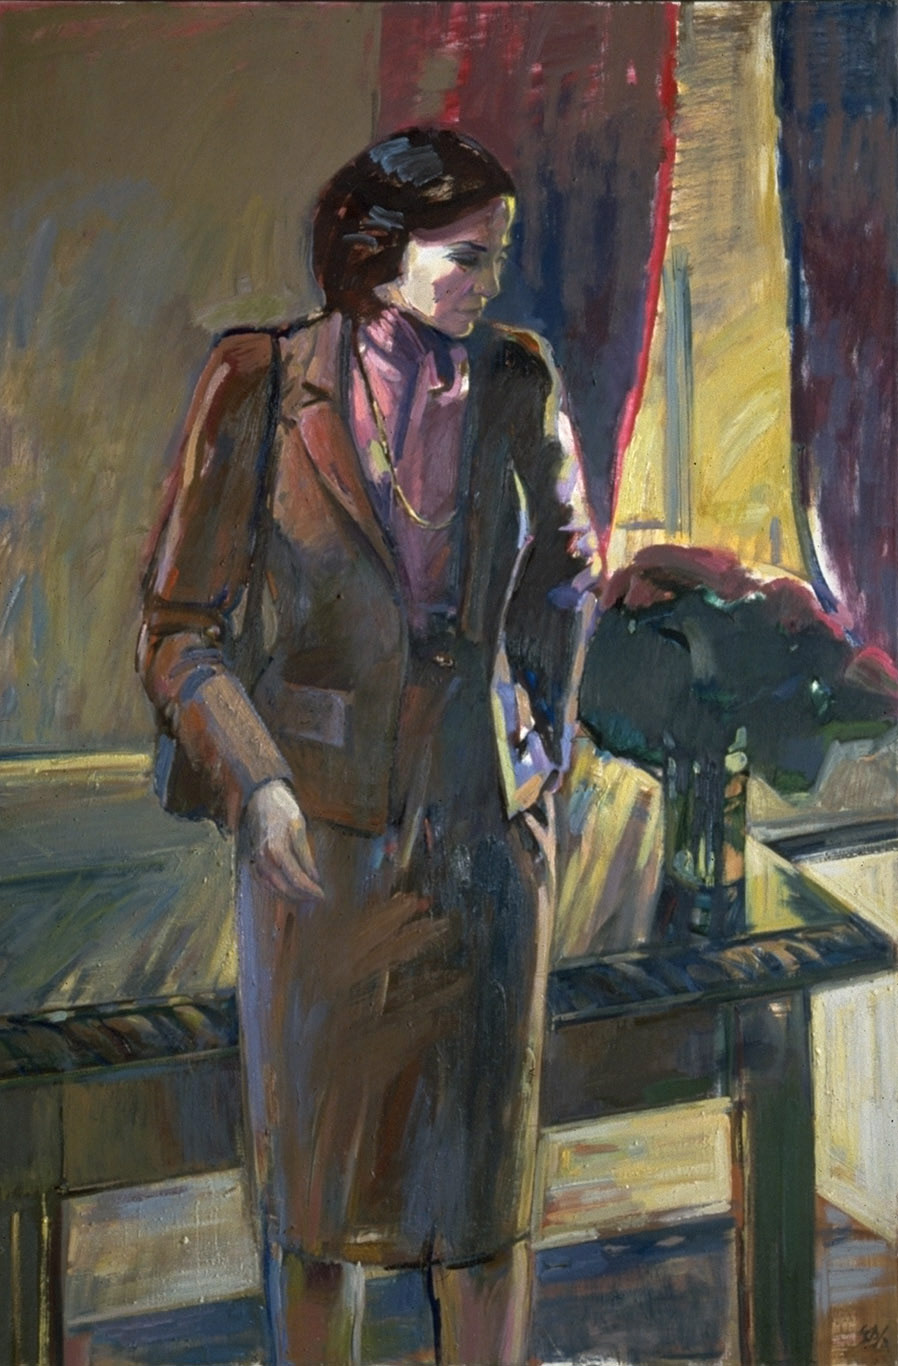 Oil Painting of Senator Dianne Feinstein, then Mayor of San Francisco